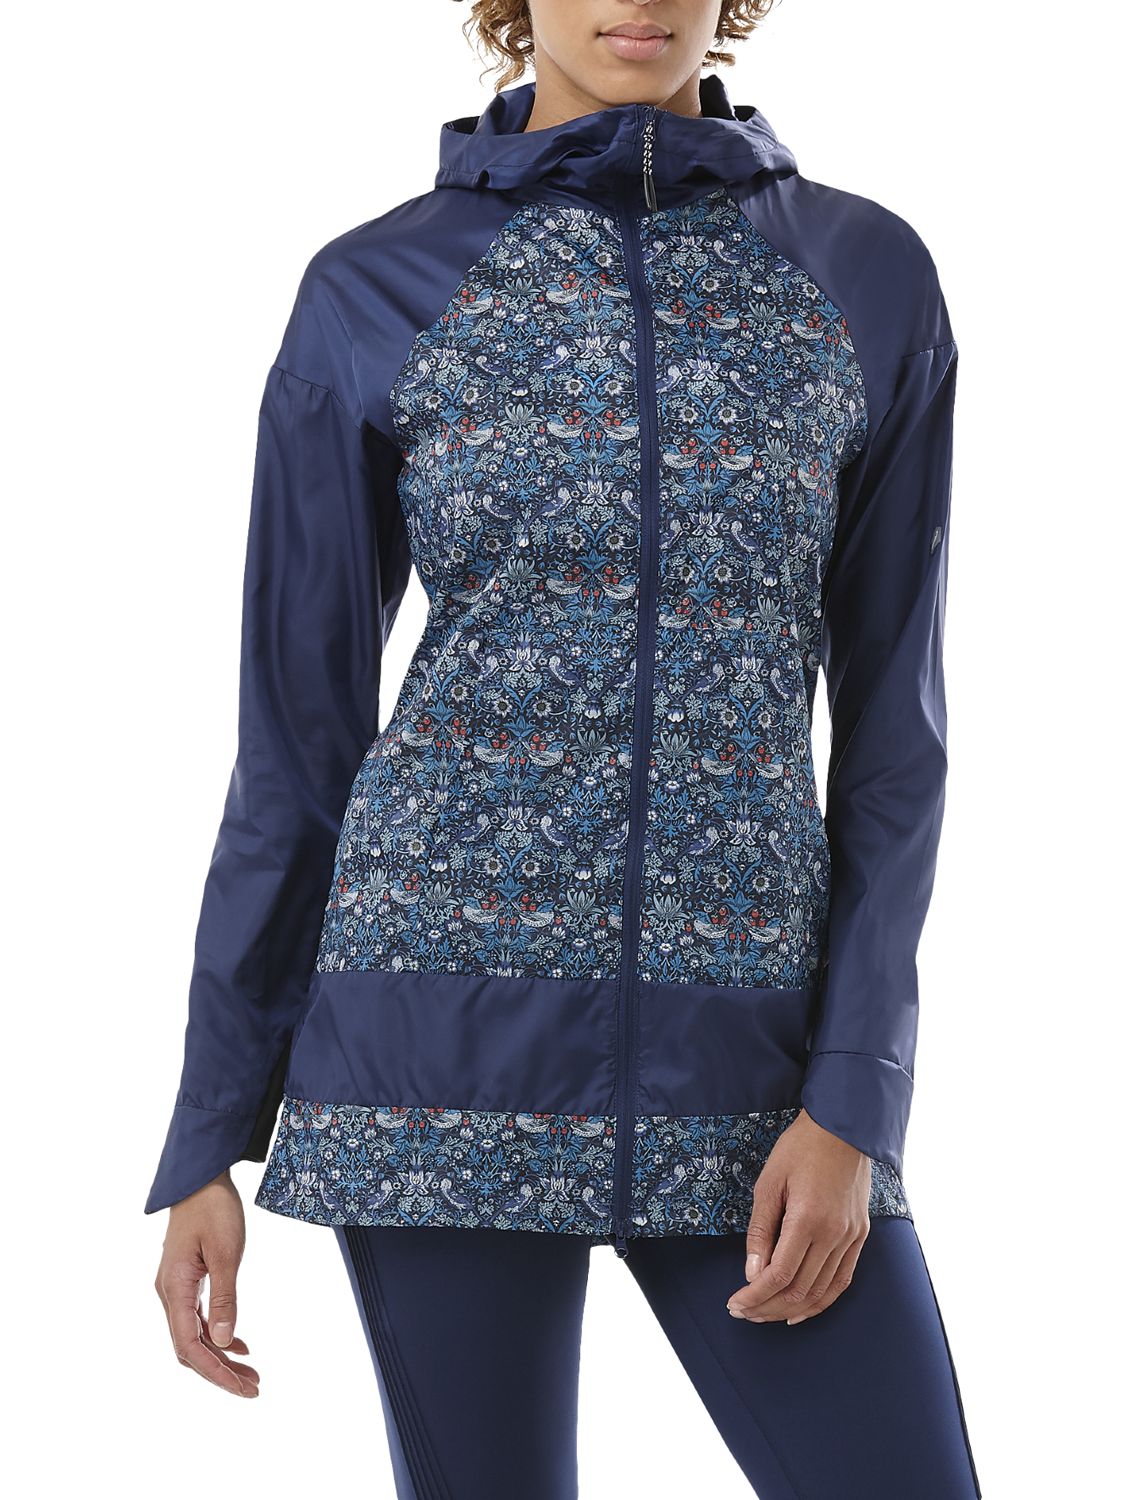 Asics Liberty Fabrics Collection Long Sleeve Running Jacket, Blue, S